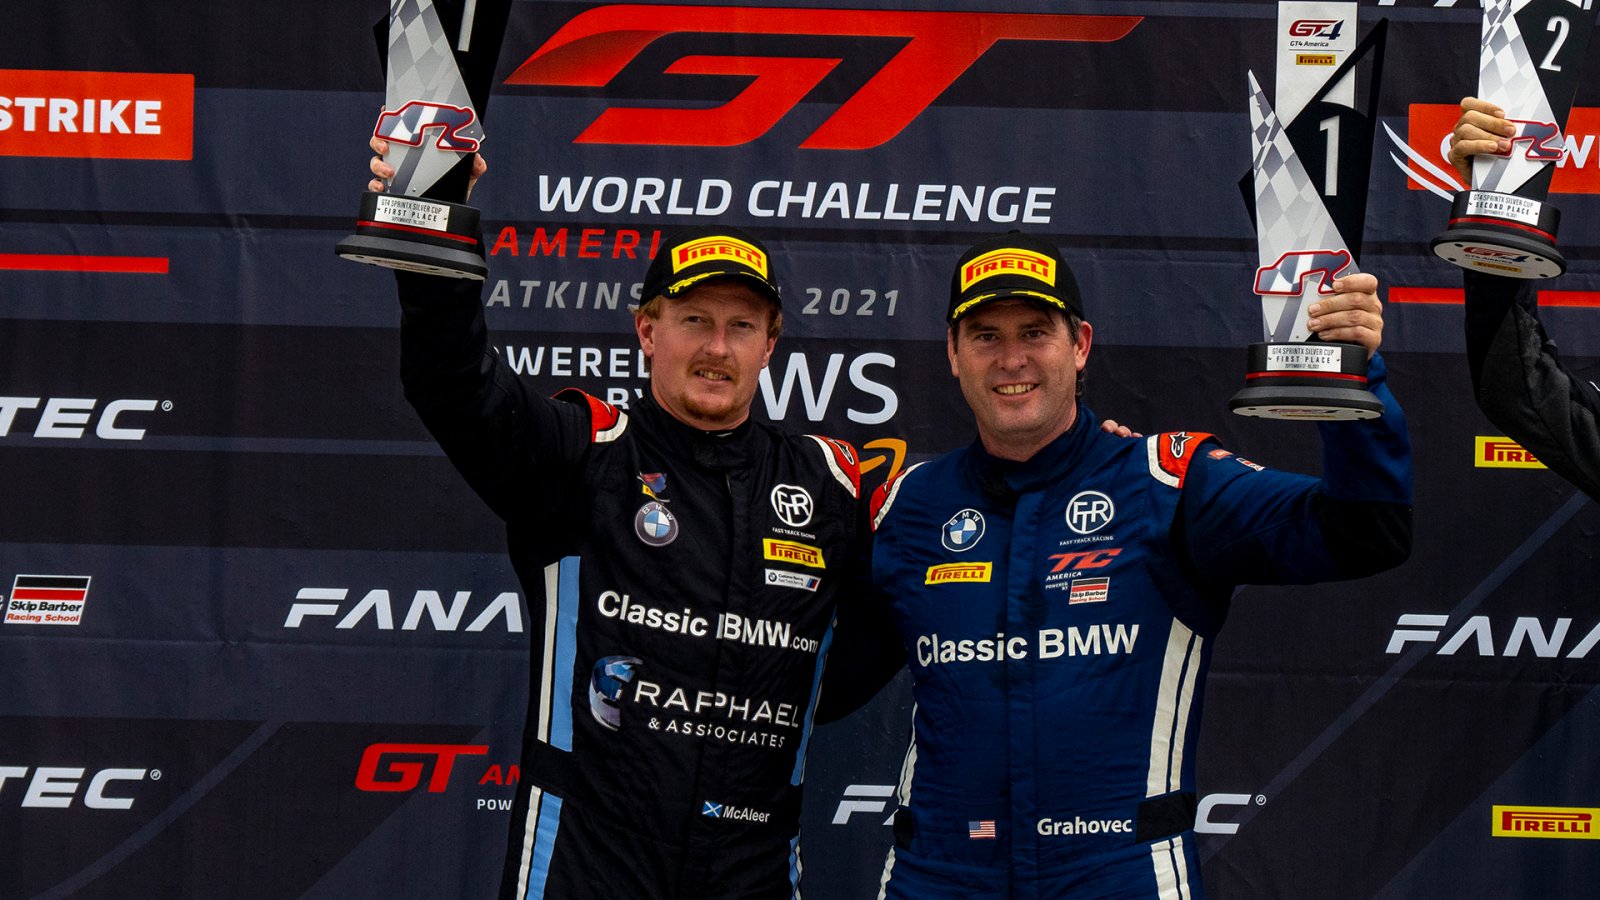 Stevan McAleer & Toby Grahovec Seek Another Pirelli GT4 America Victory This Weekend at Famed Sebring Circuit for Fast Track Racing